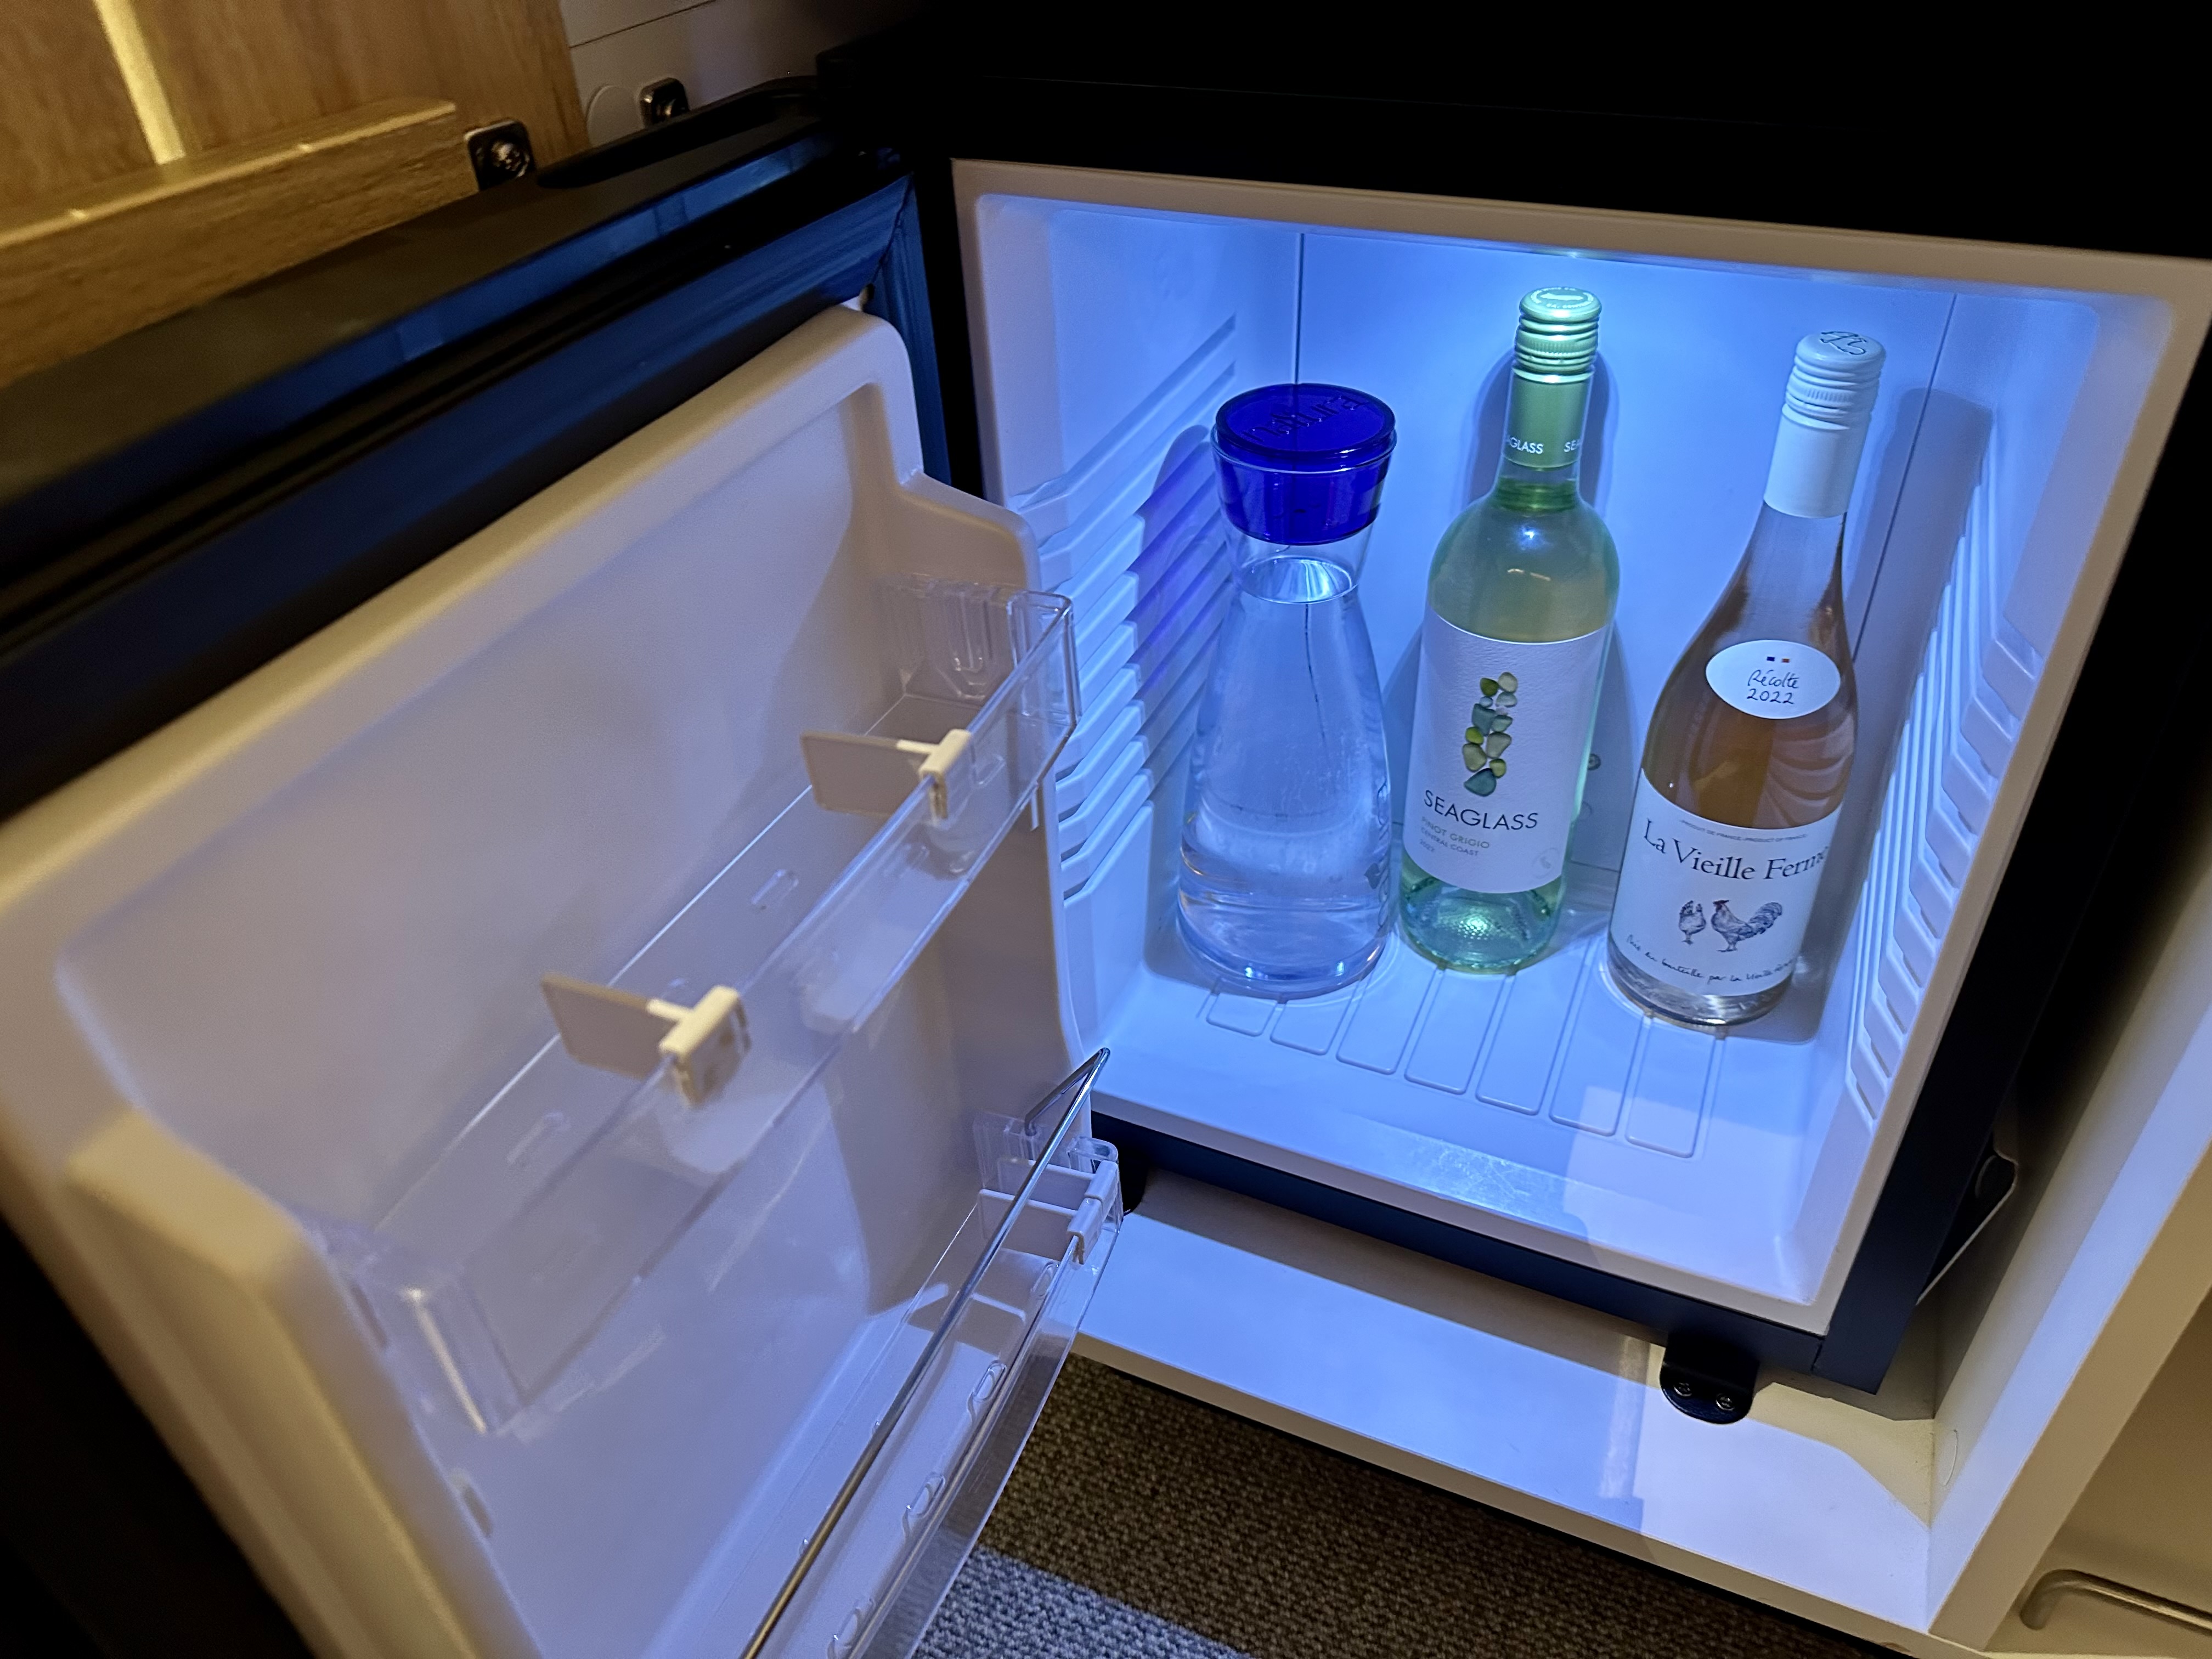 a mini fridge with bottles of wine inside